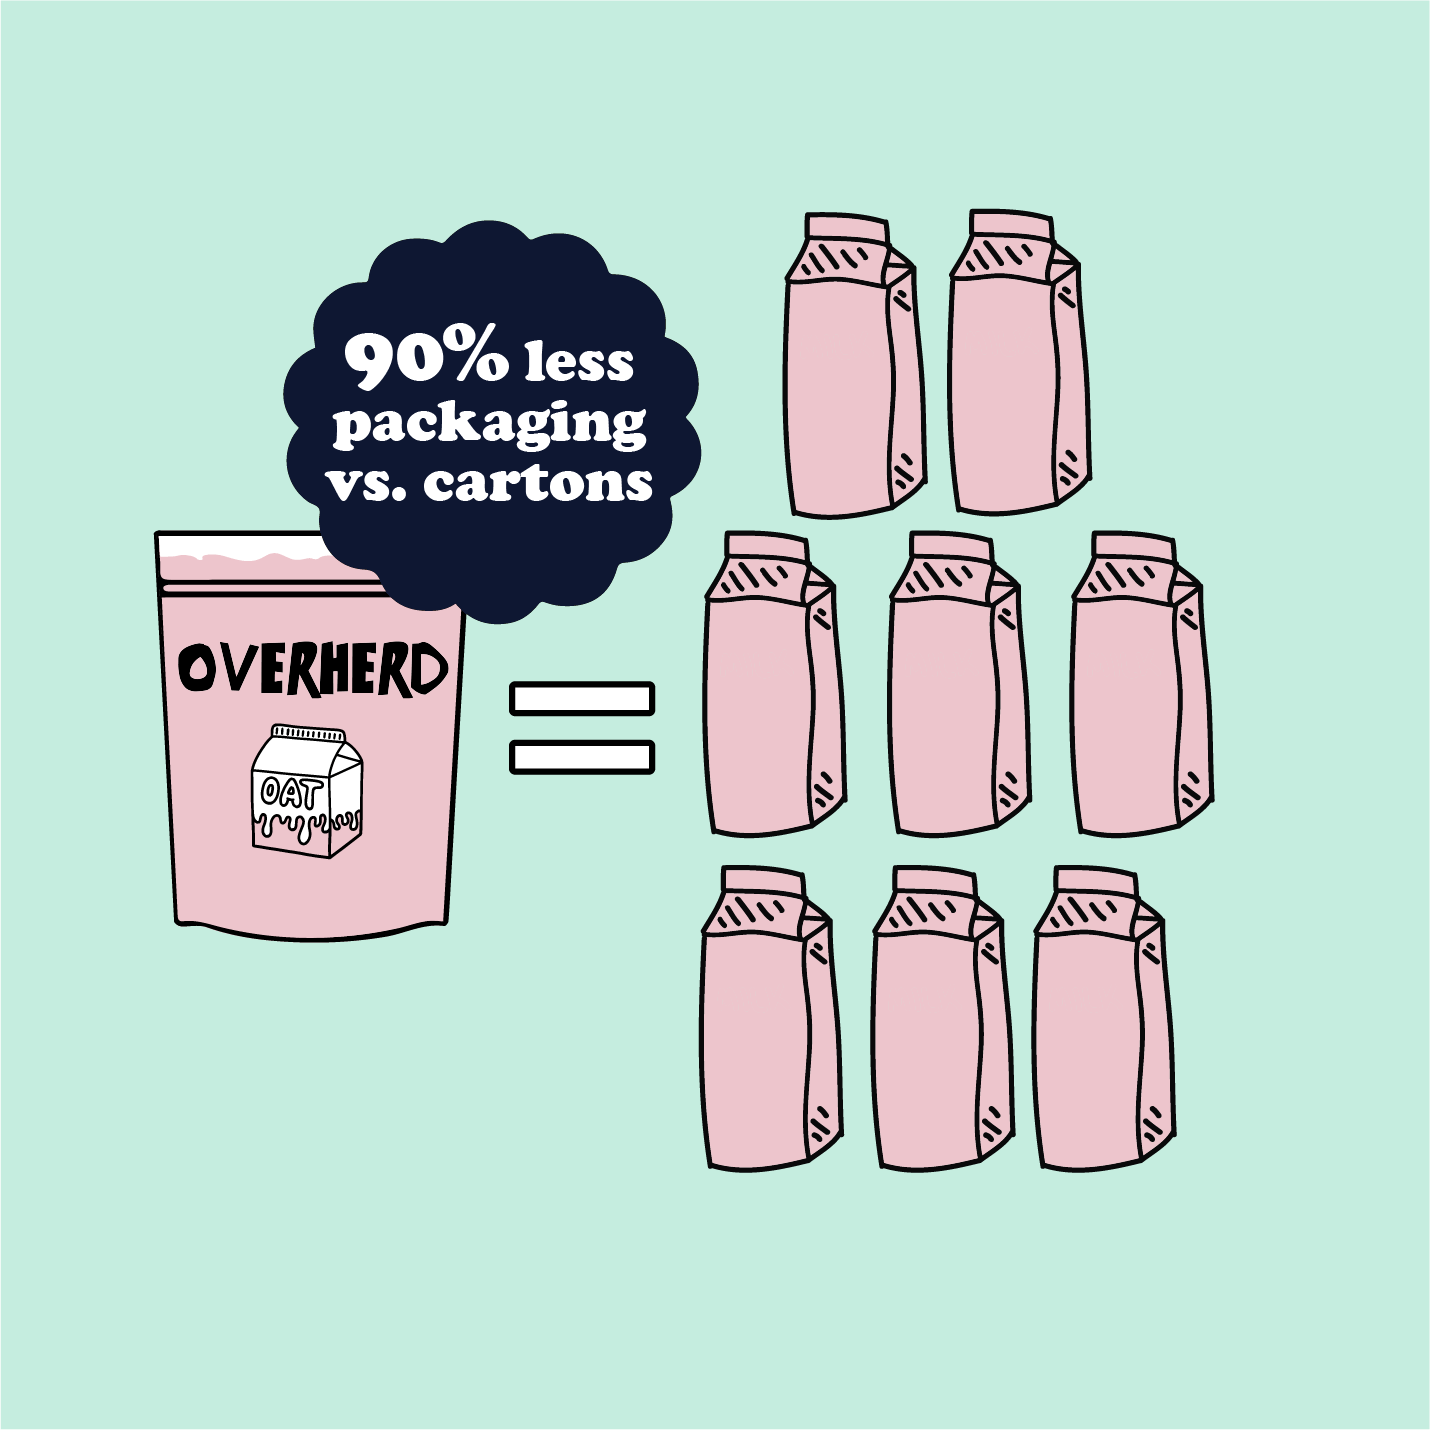 Overherd vs. regular oat milk packaging waste